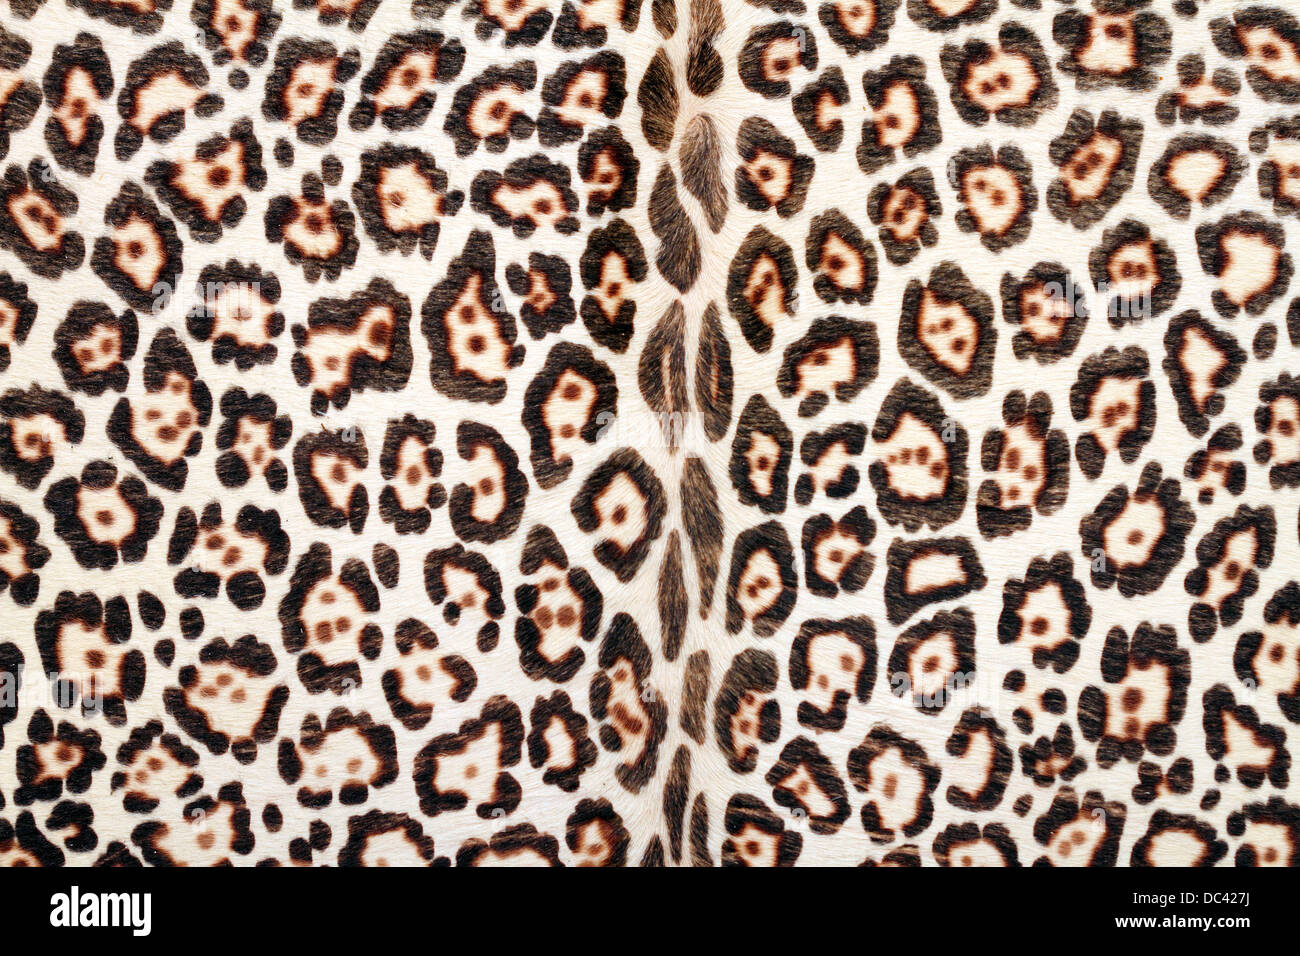 closeup of leopard fur - interesting texture Stock Photo